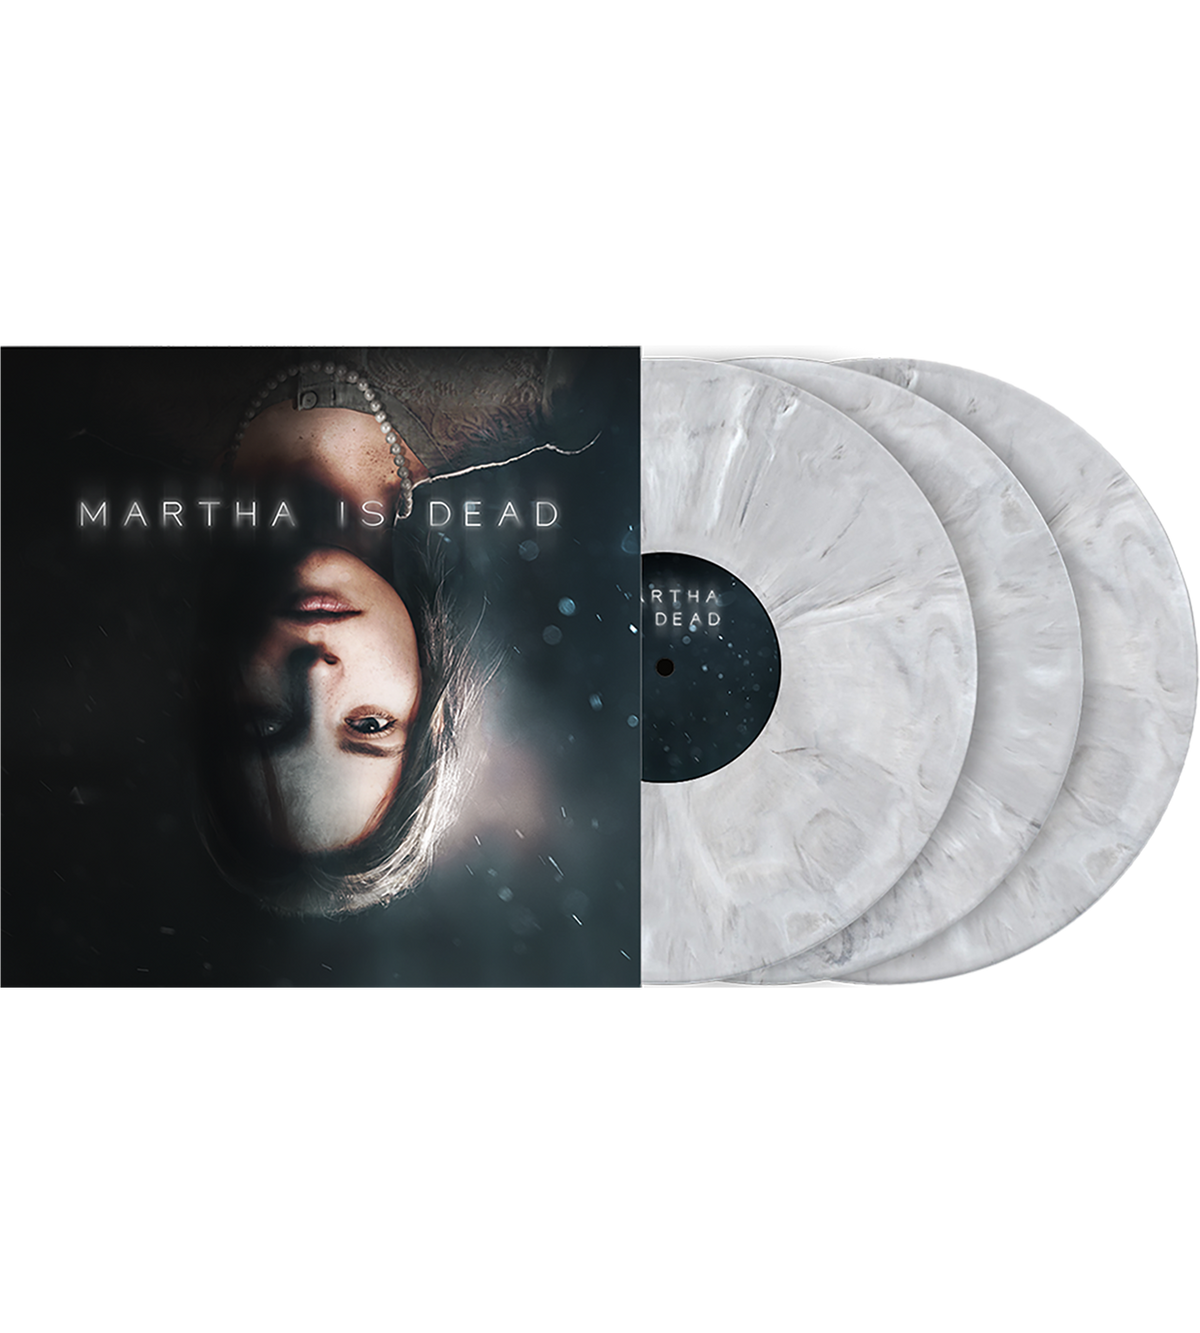 Martha is Dead - 3LP Vinyl Soundtrack